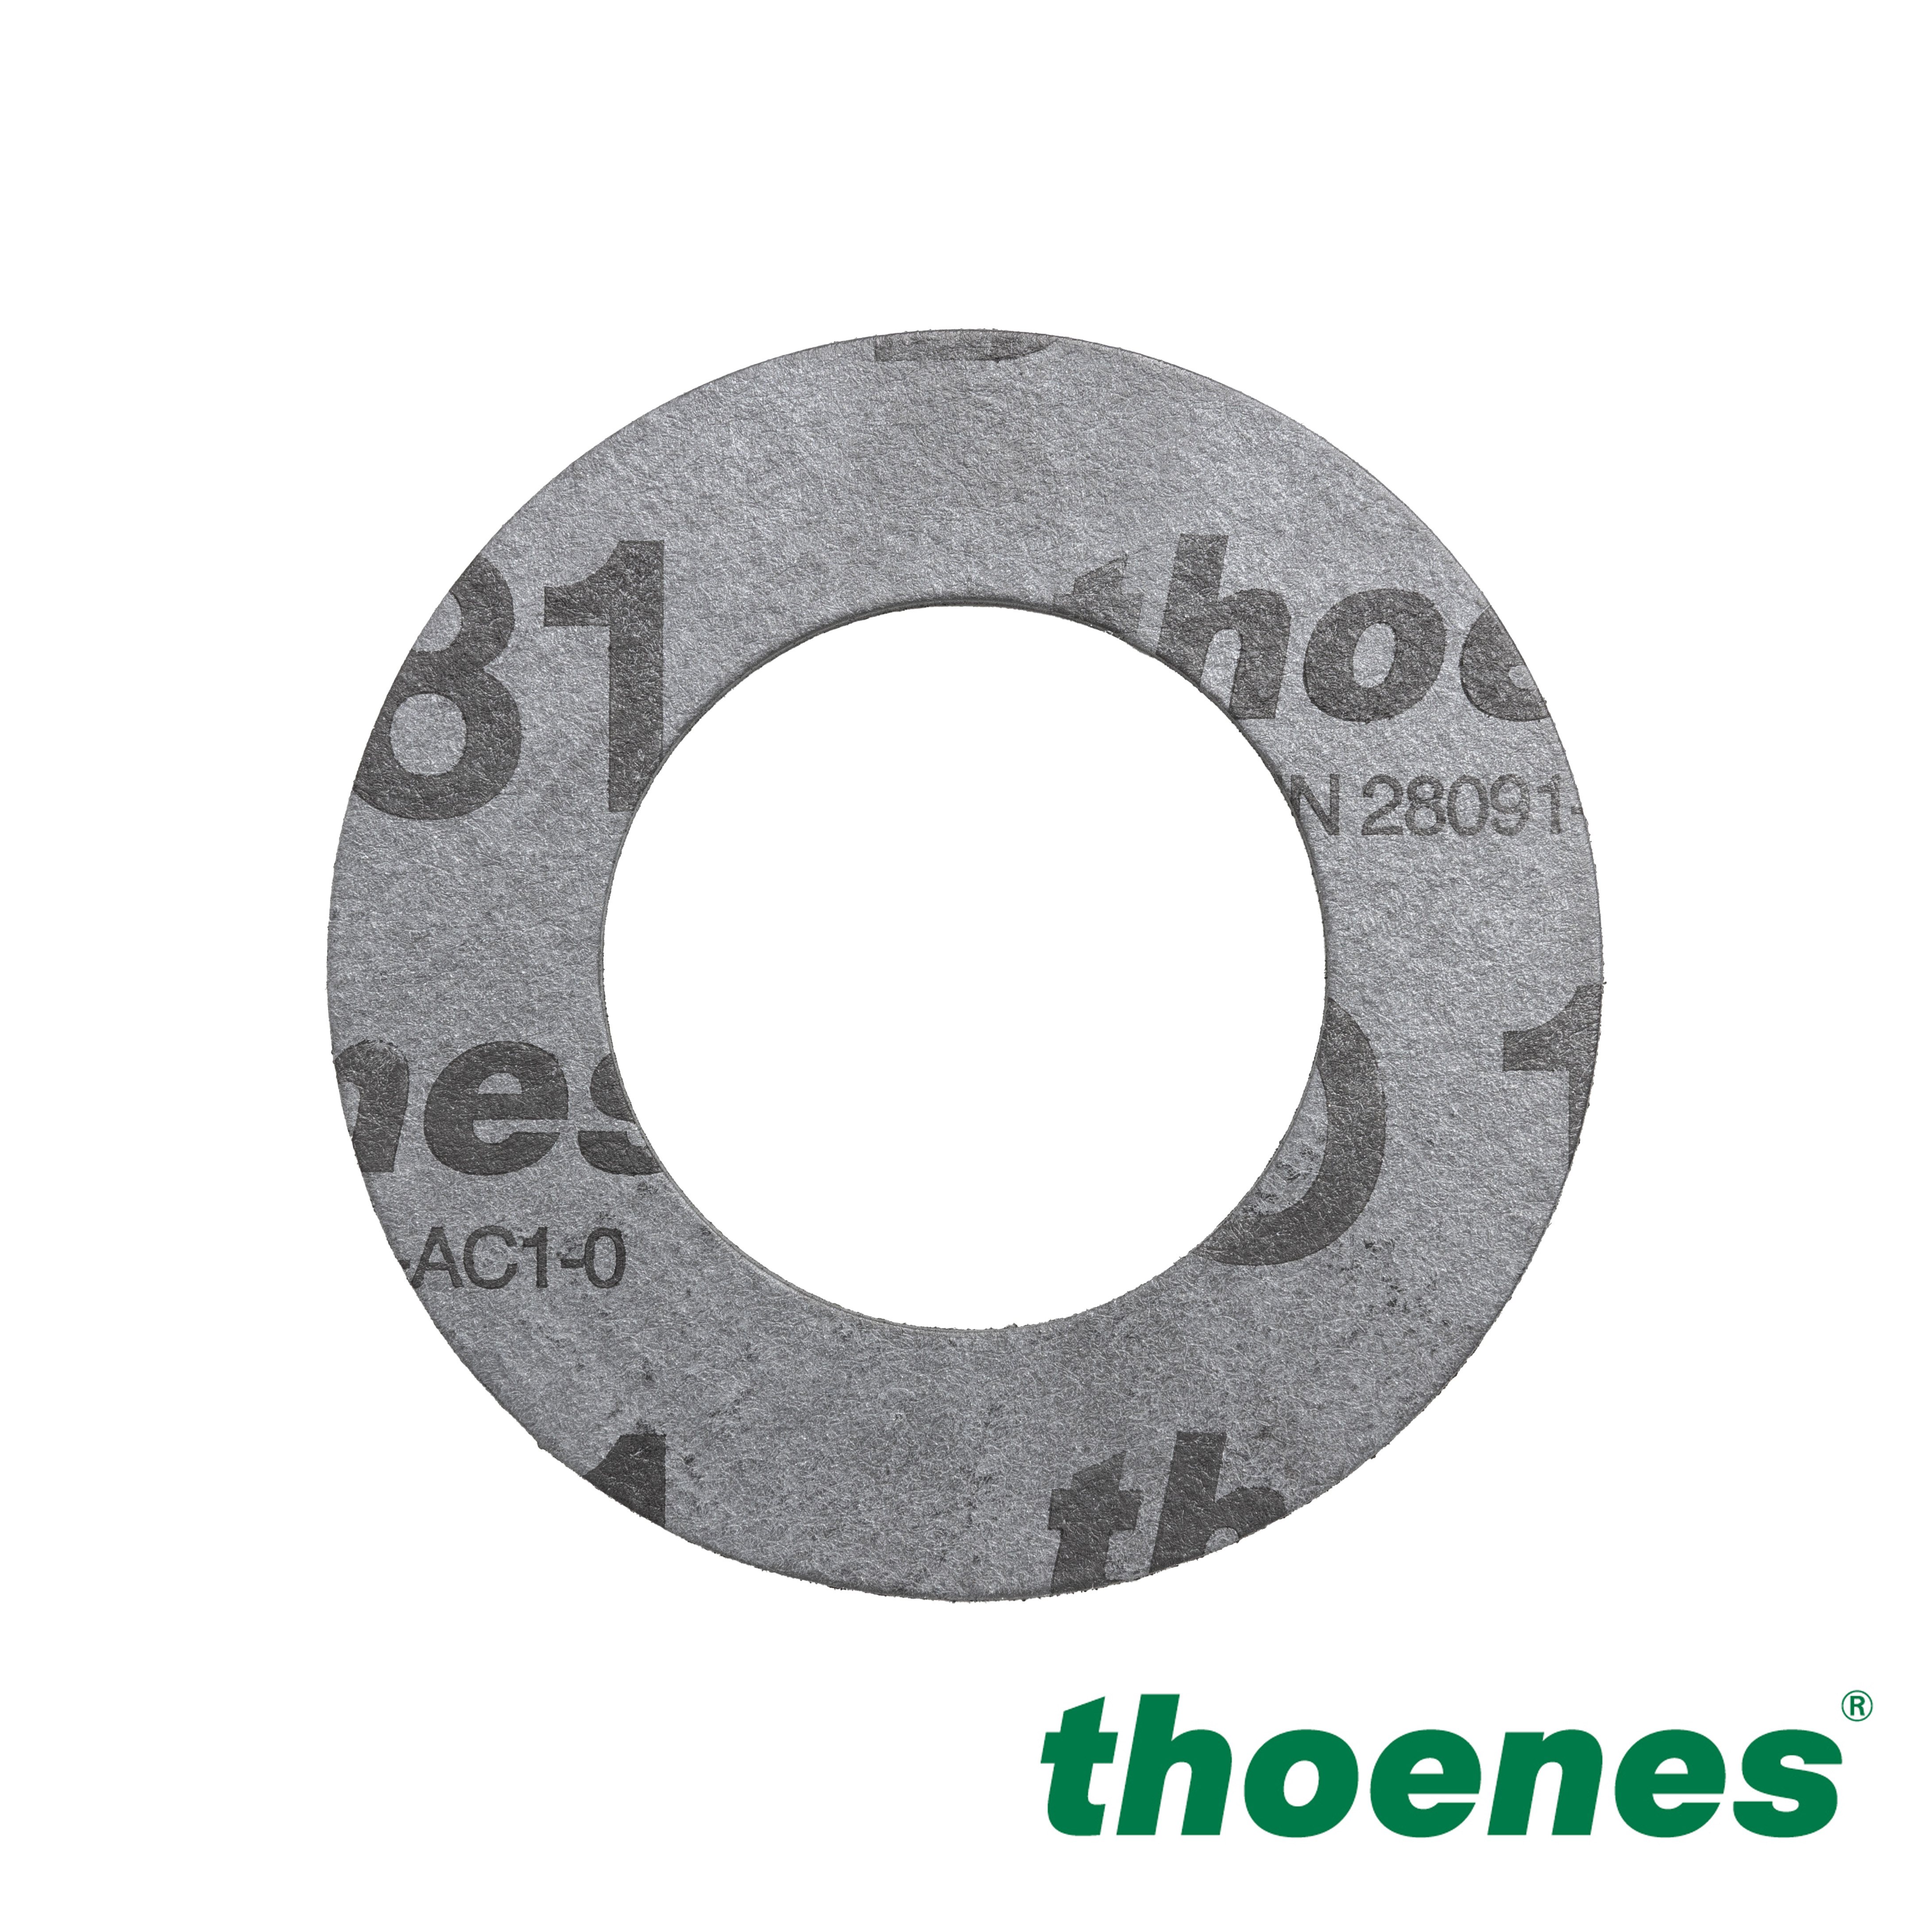 thoenes® DO181 gasket material